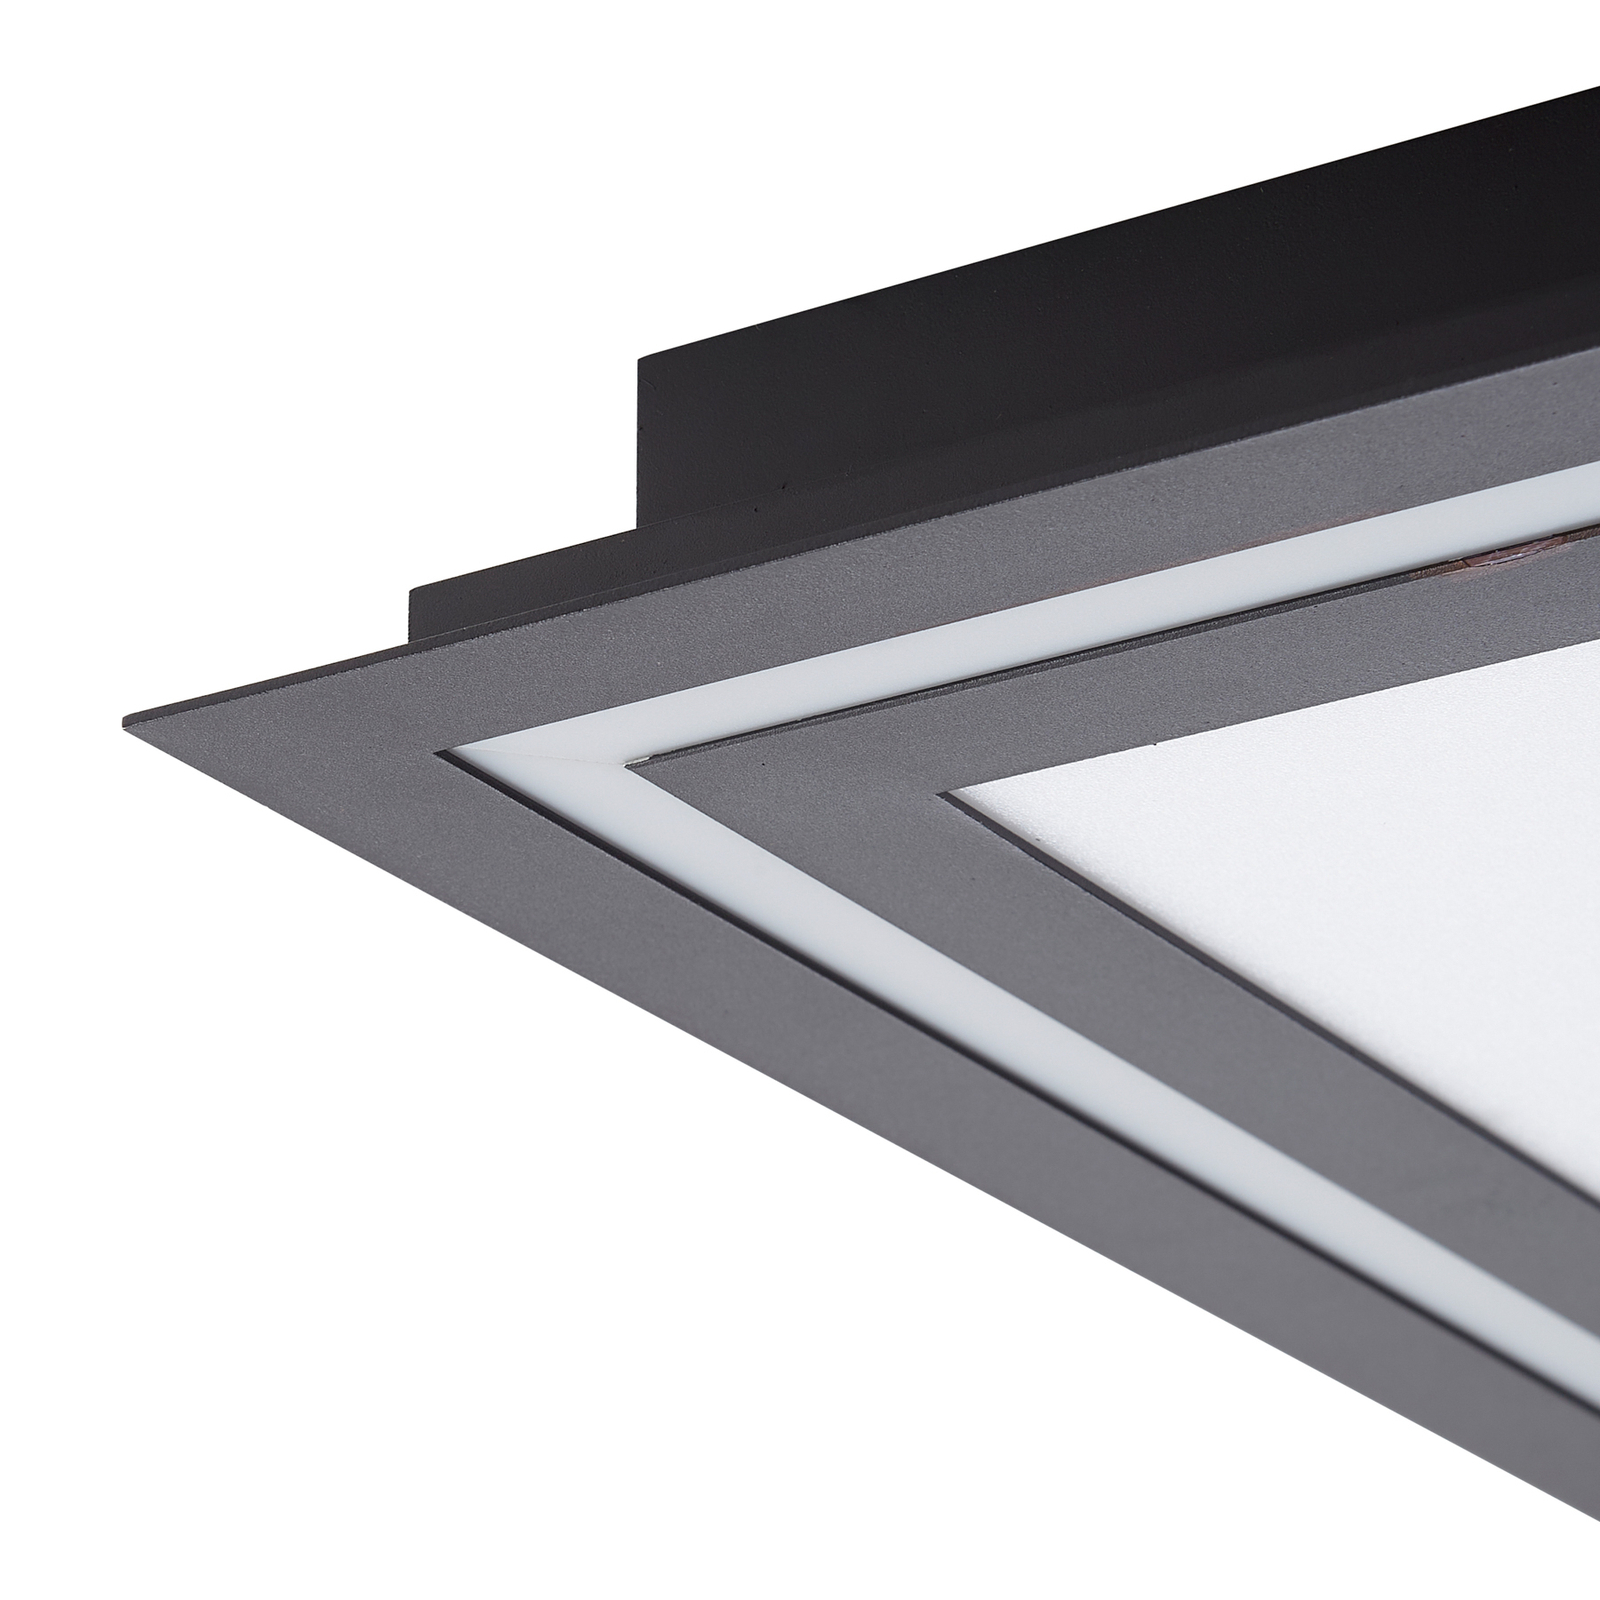 Lucande LED ceiling lamp Leicy, black, 44 cm, RGB, CCT